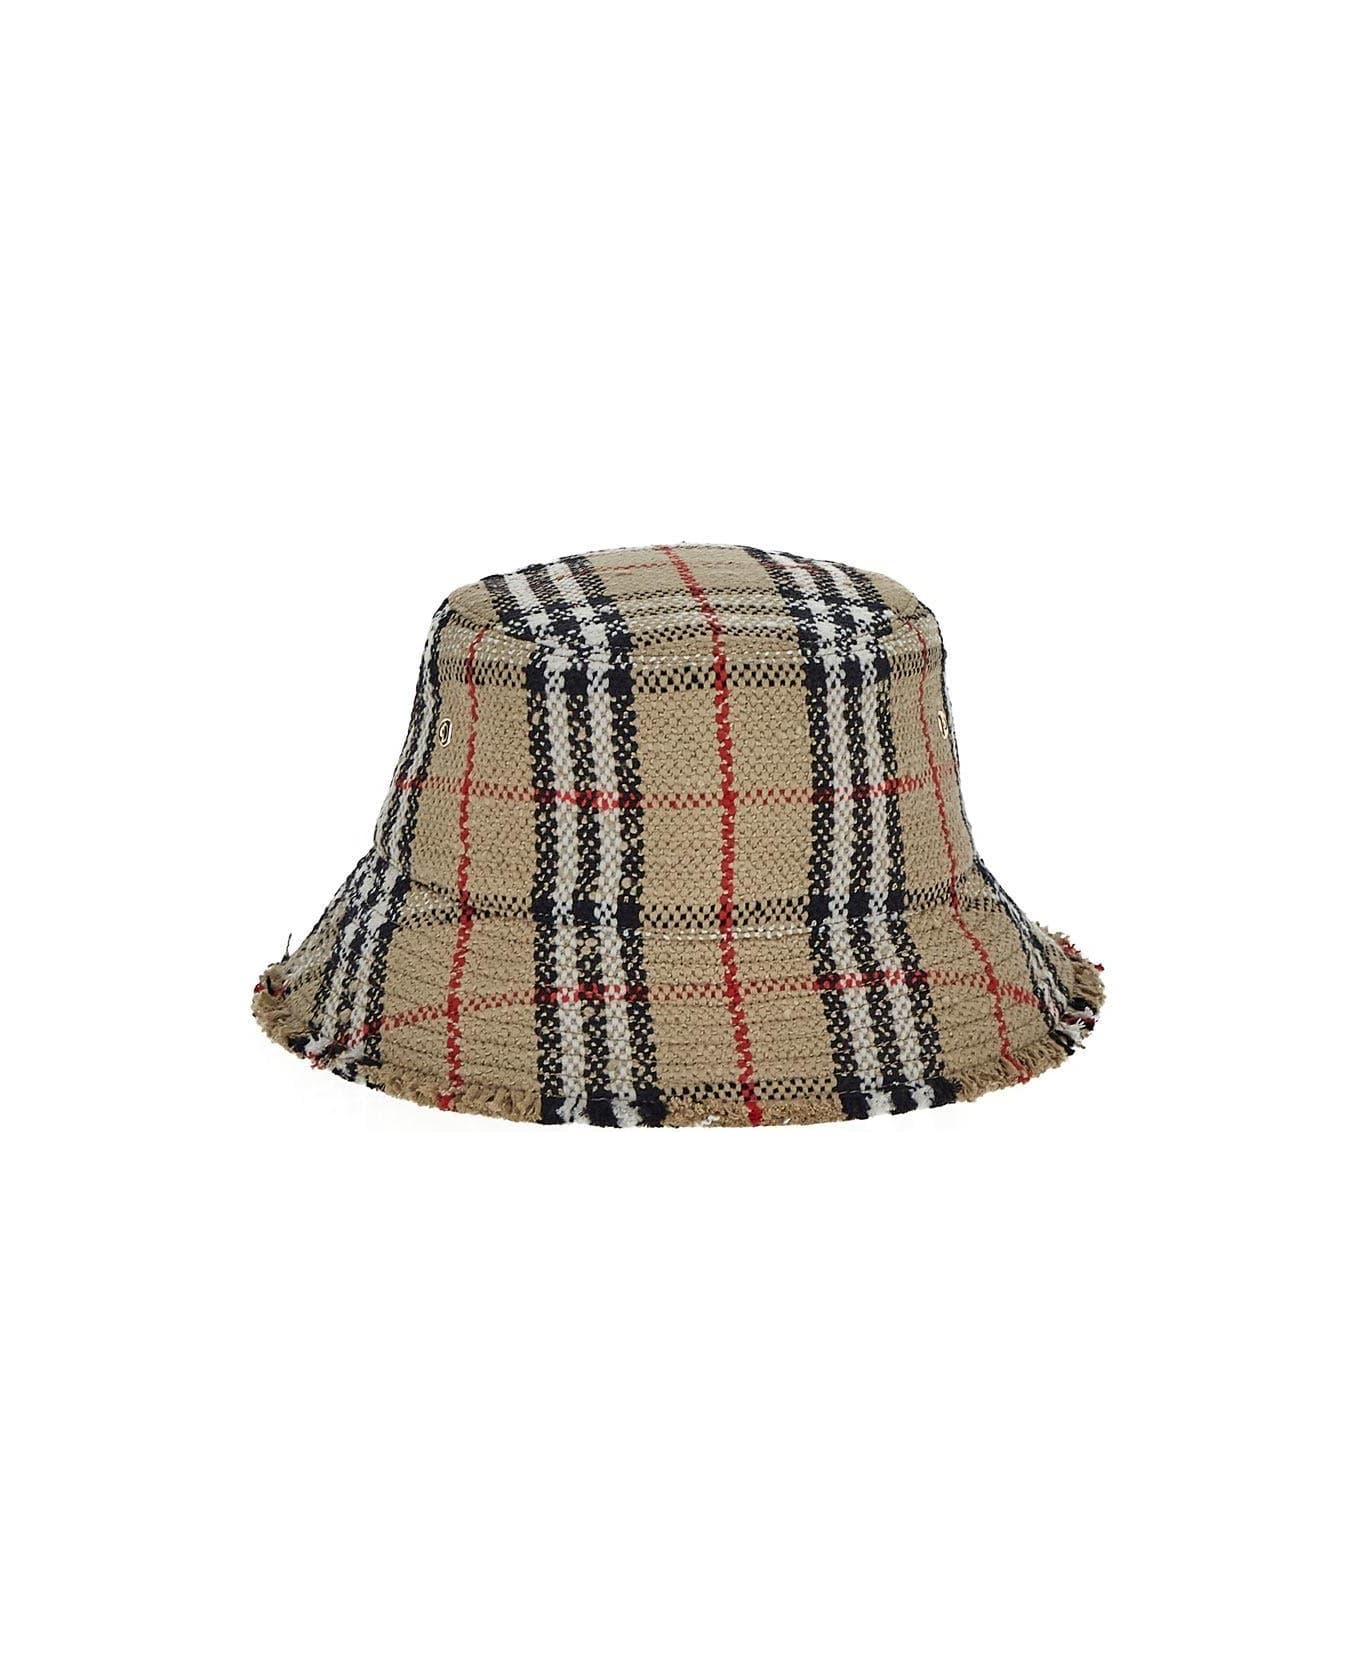 Burberry Check Bouclè Bucket Hat - Archive beige chk 帽子